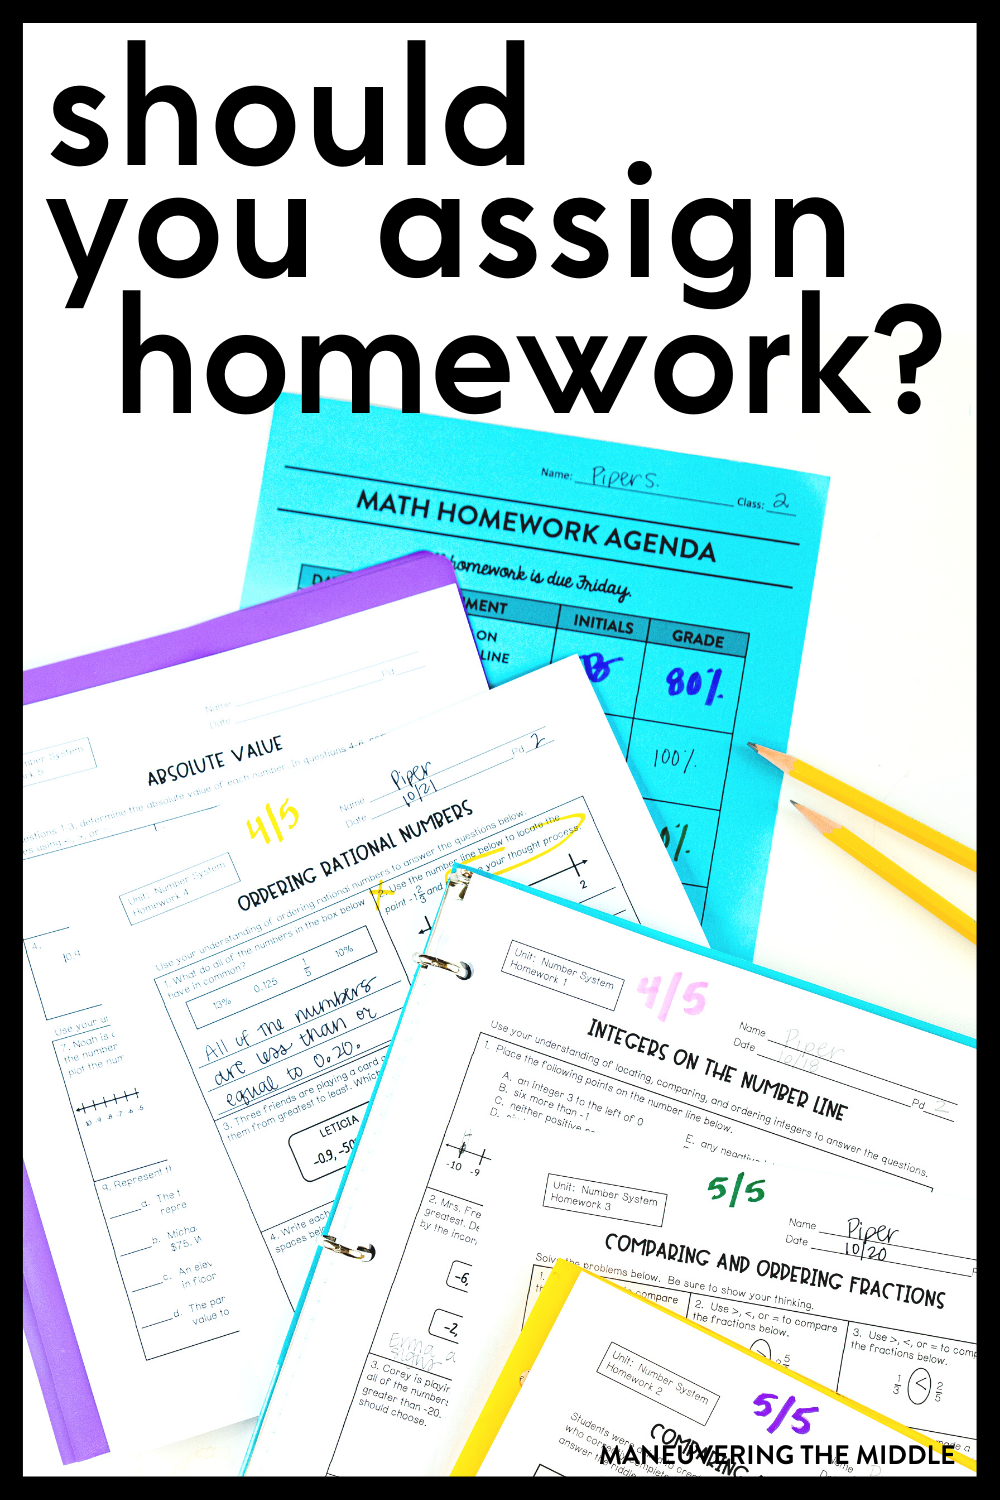 3 reasons why teachers should assign less homework